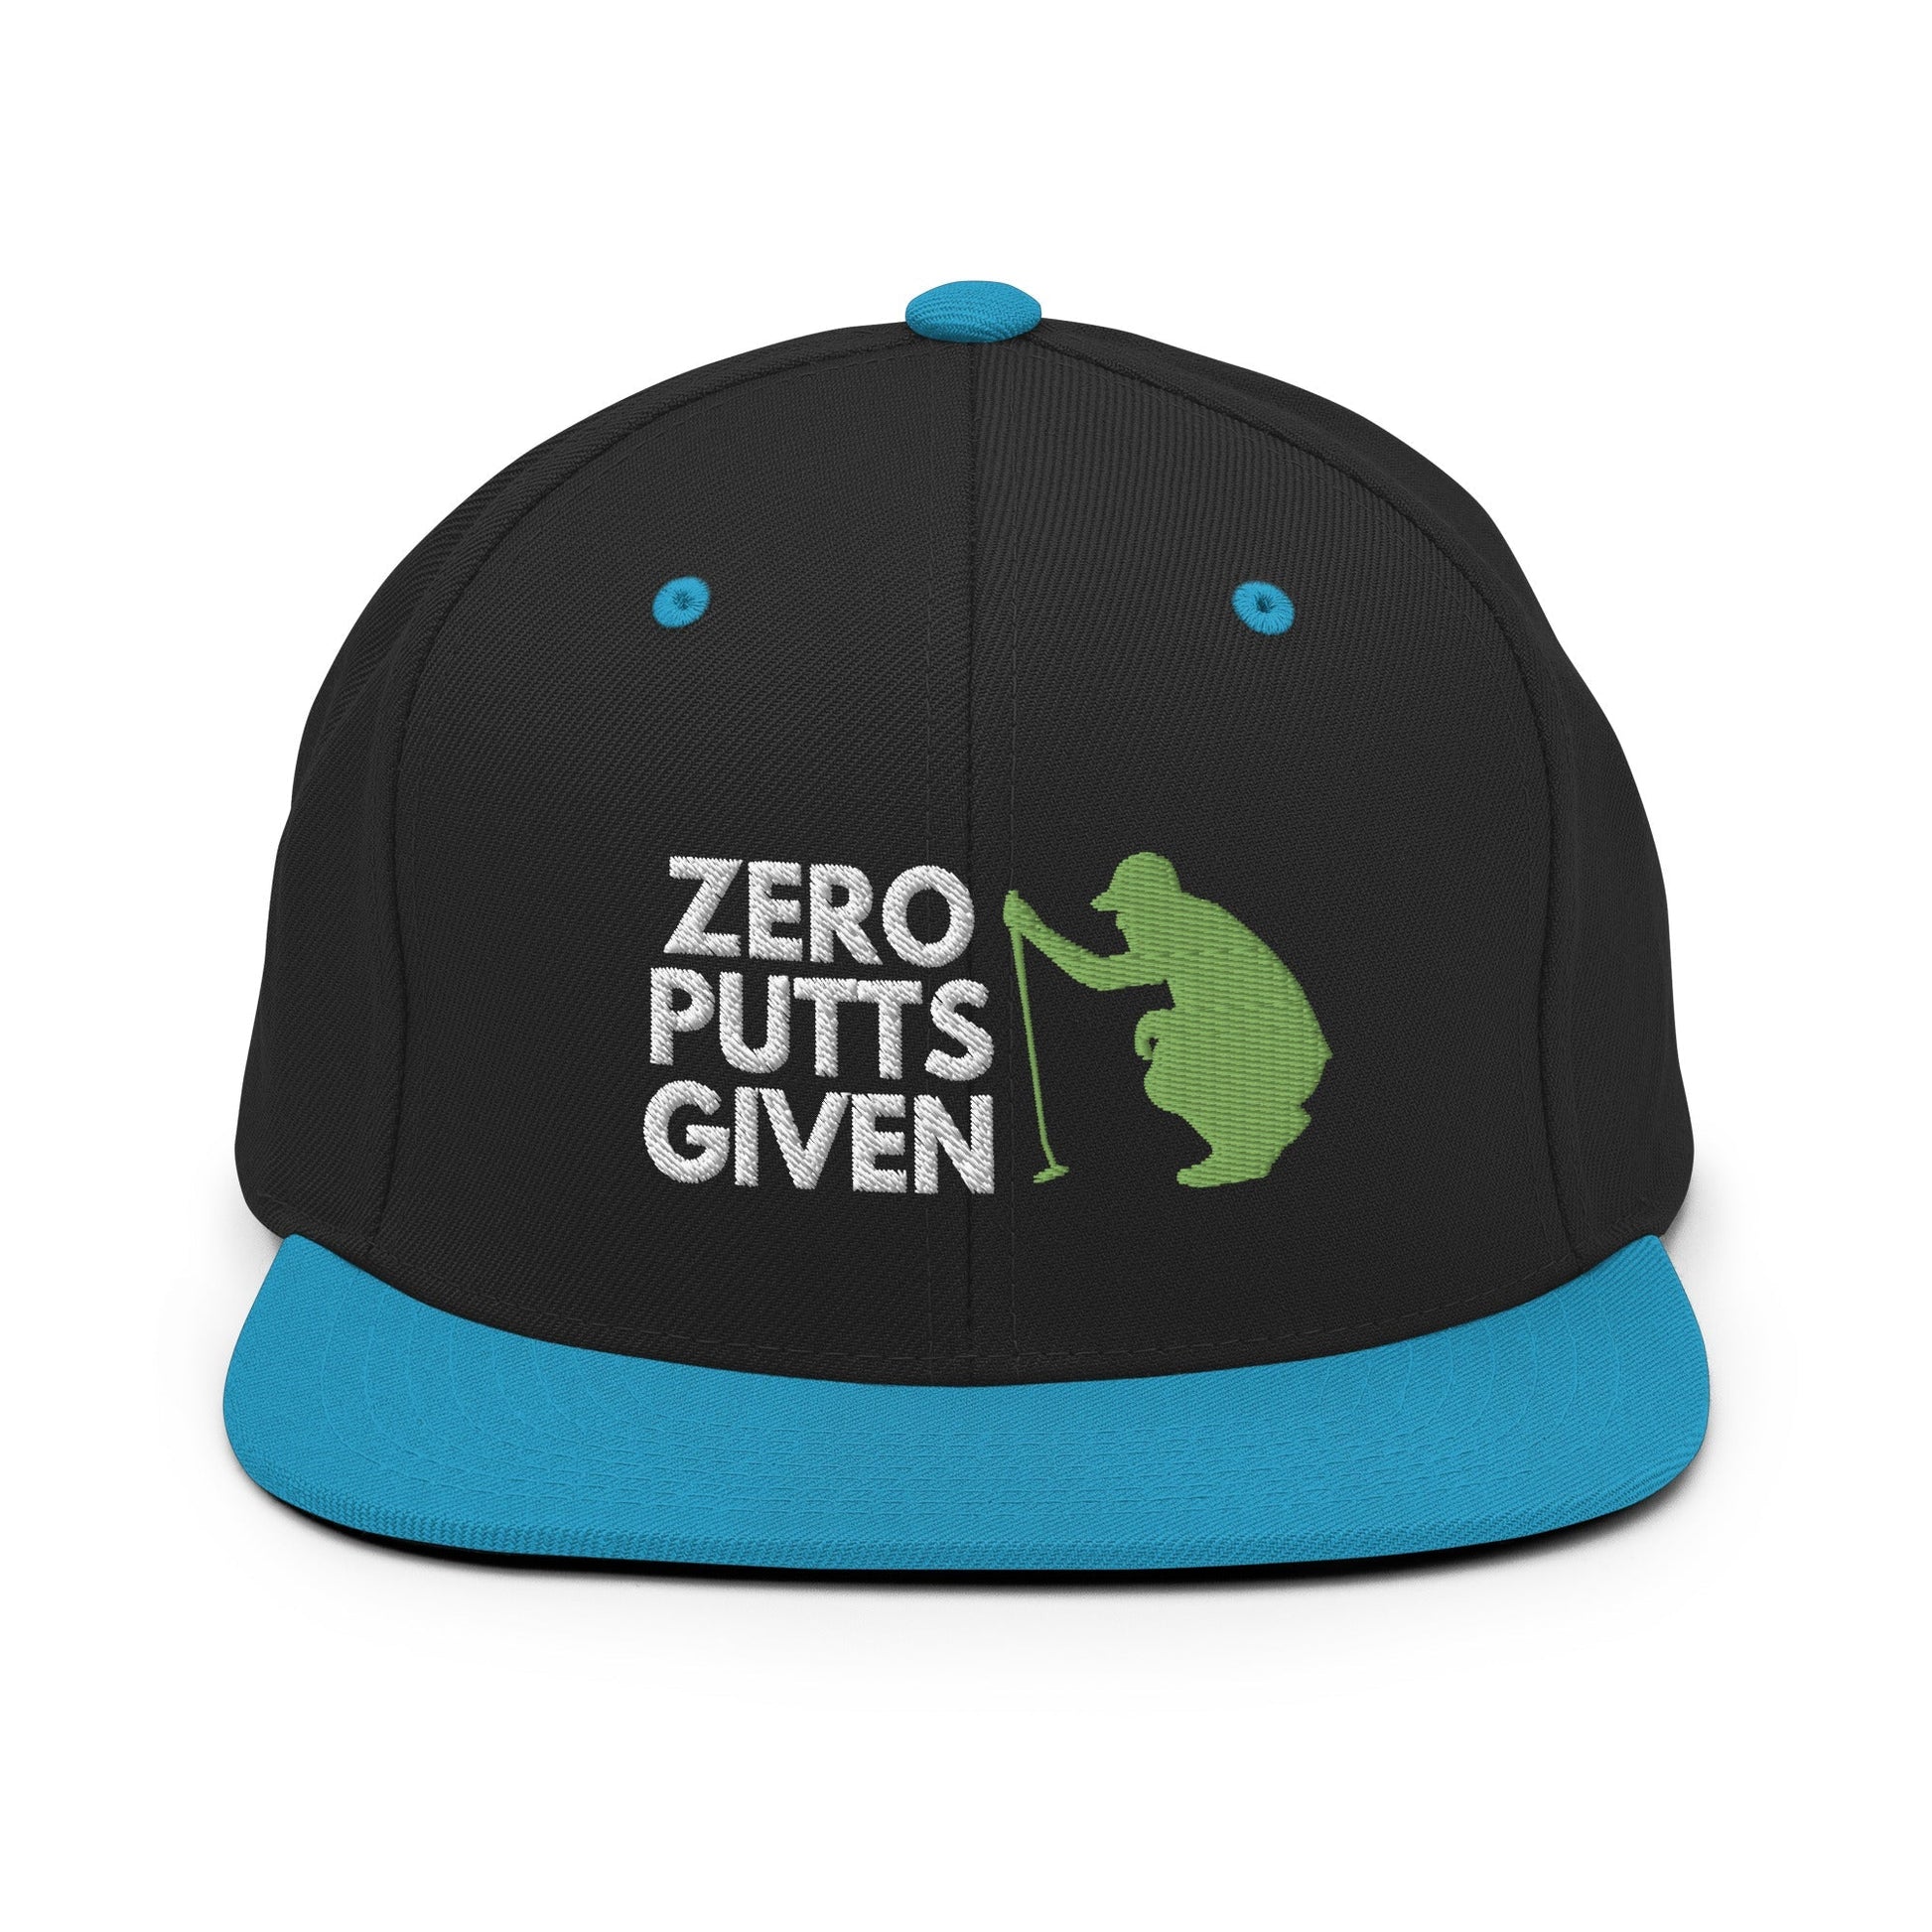 Funny Golfer Gifts  Snapback Hat Black/ Teal Zero Putts Given Hat Snapback Hat